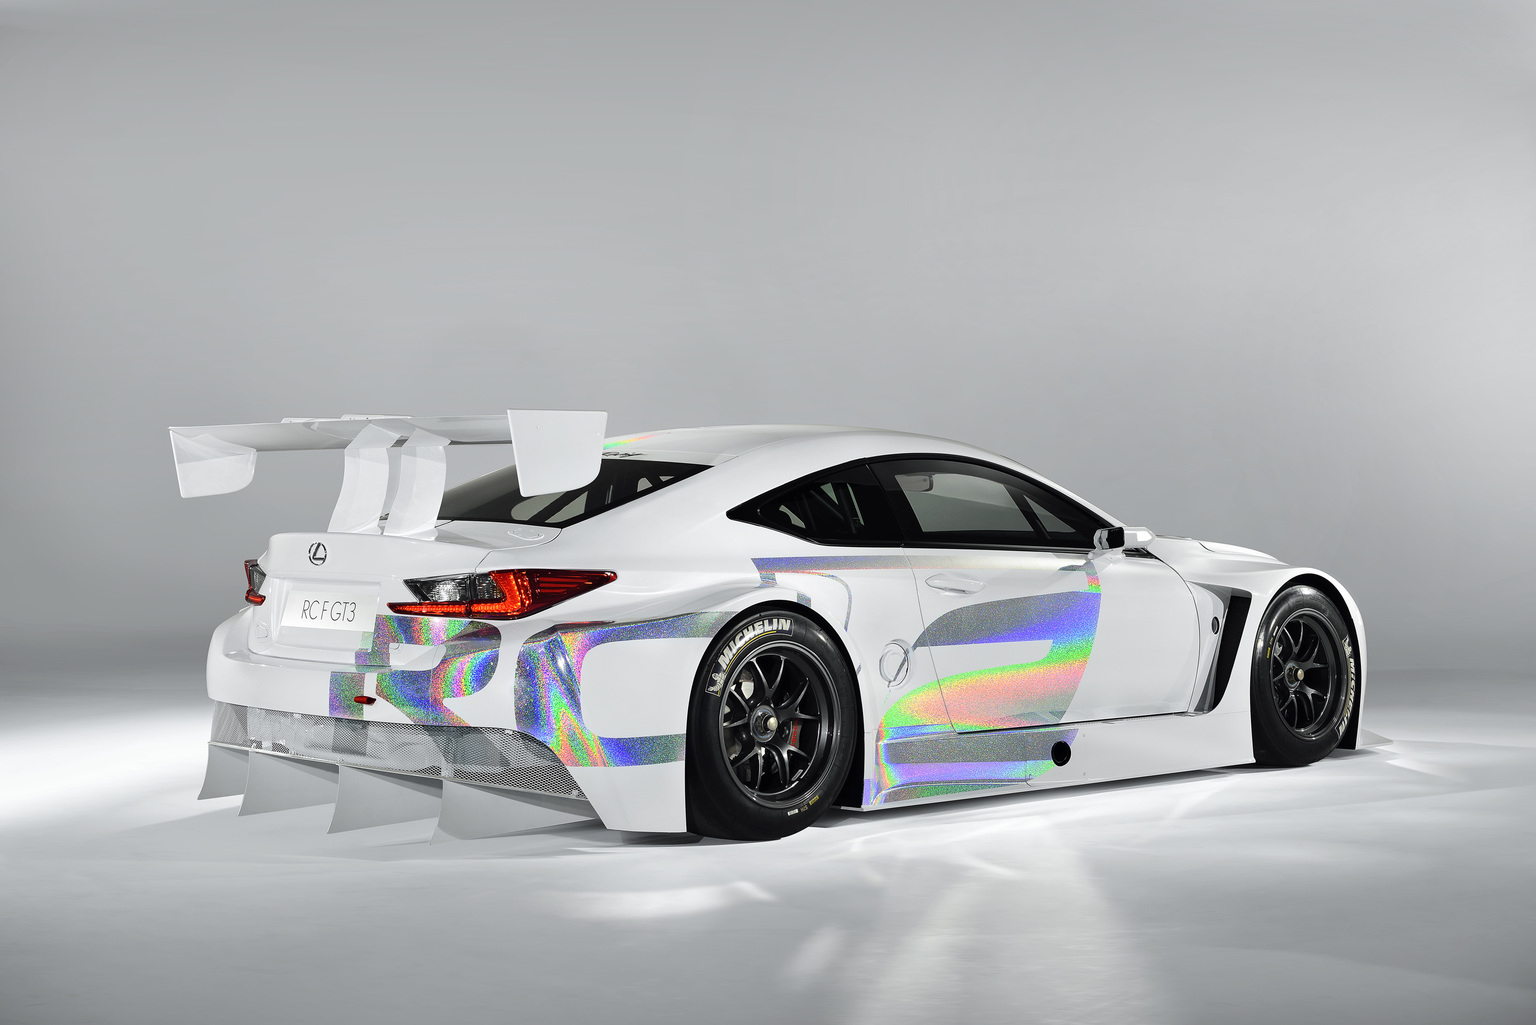 2014 Lexus RC F GT3 Concept